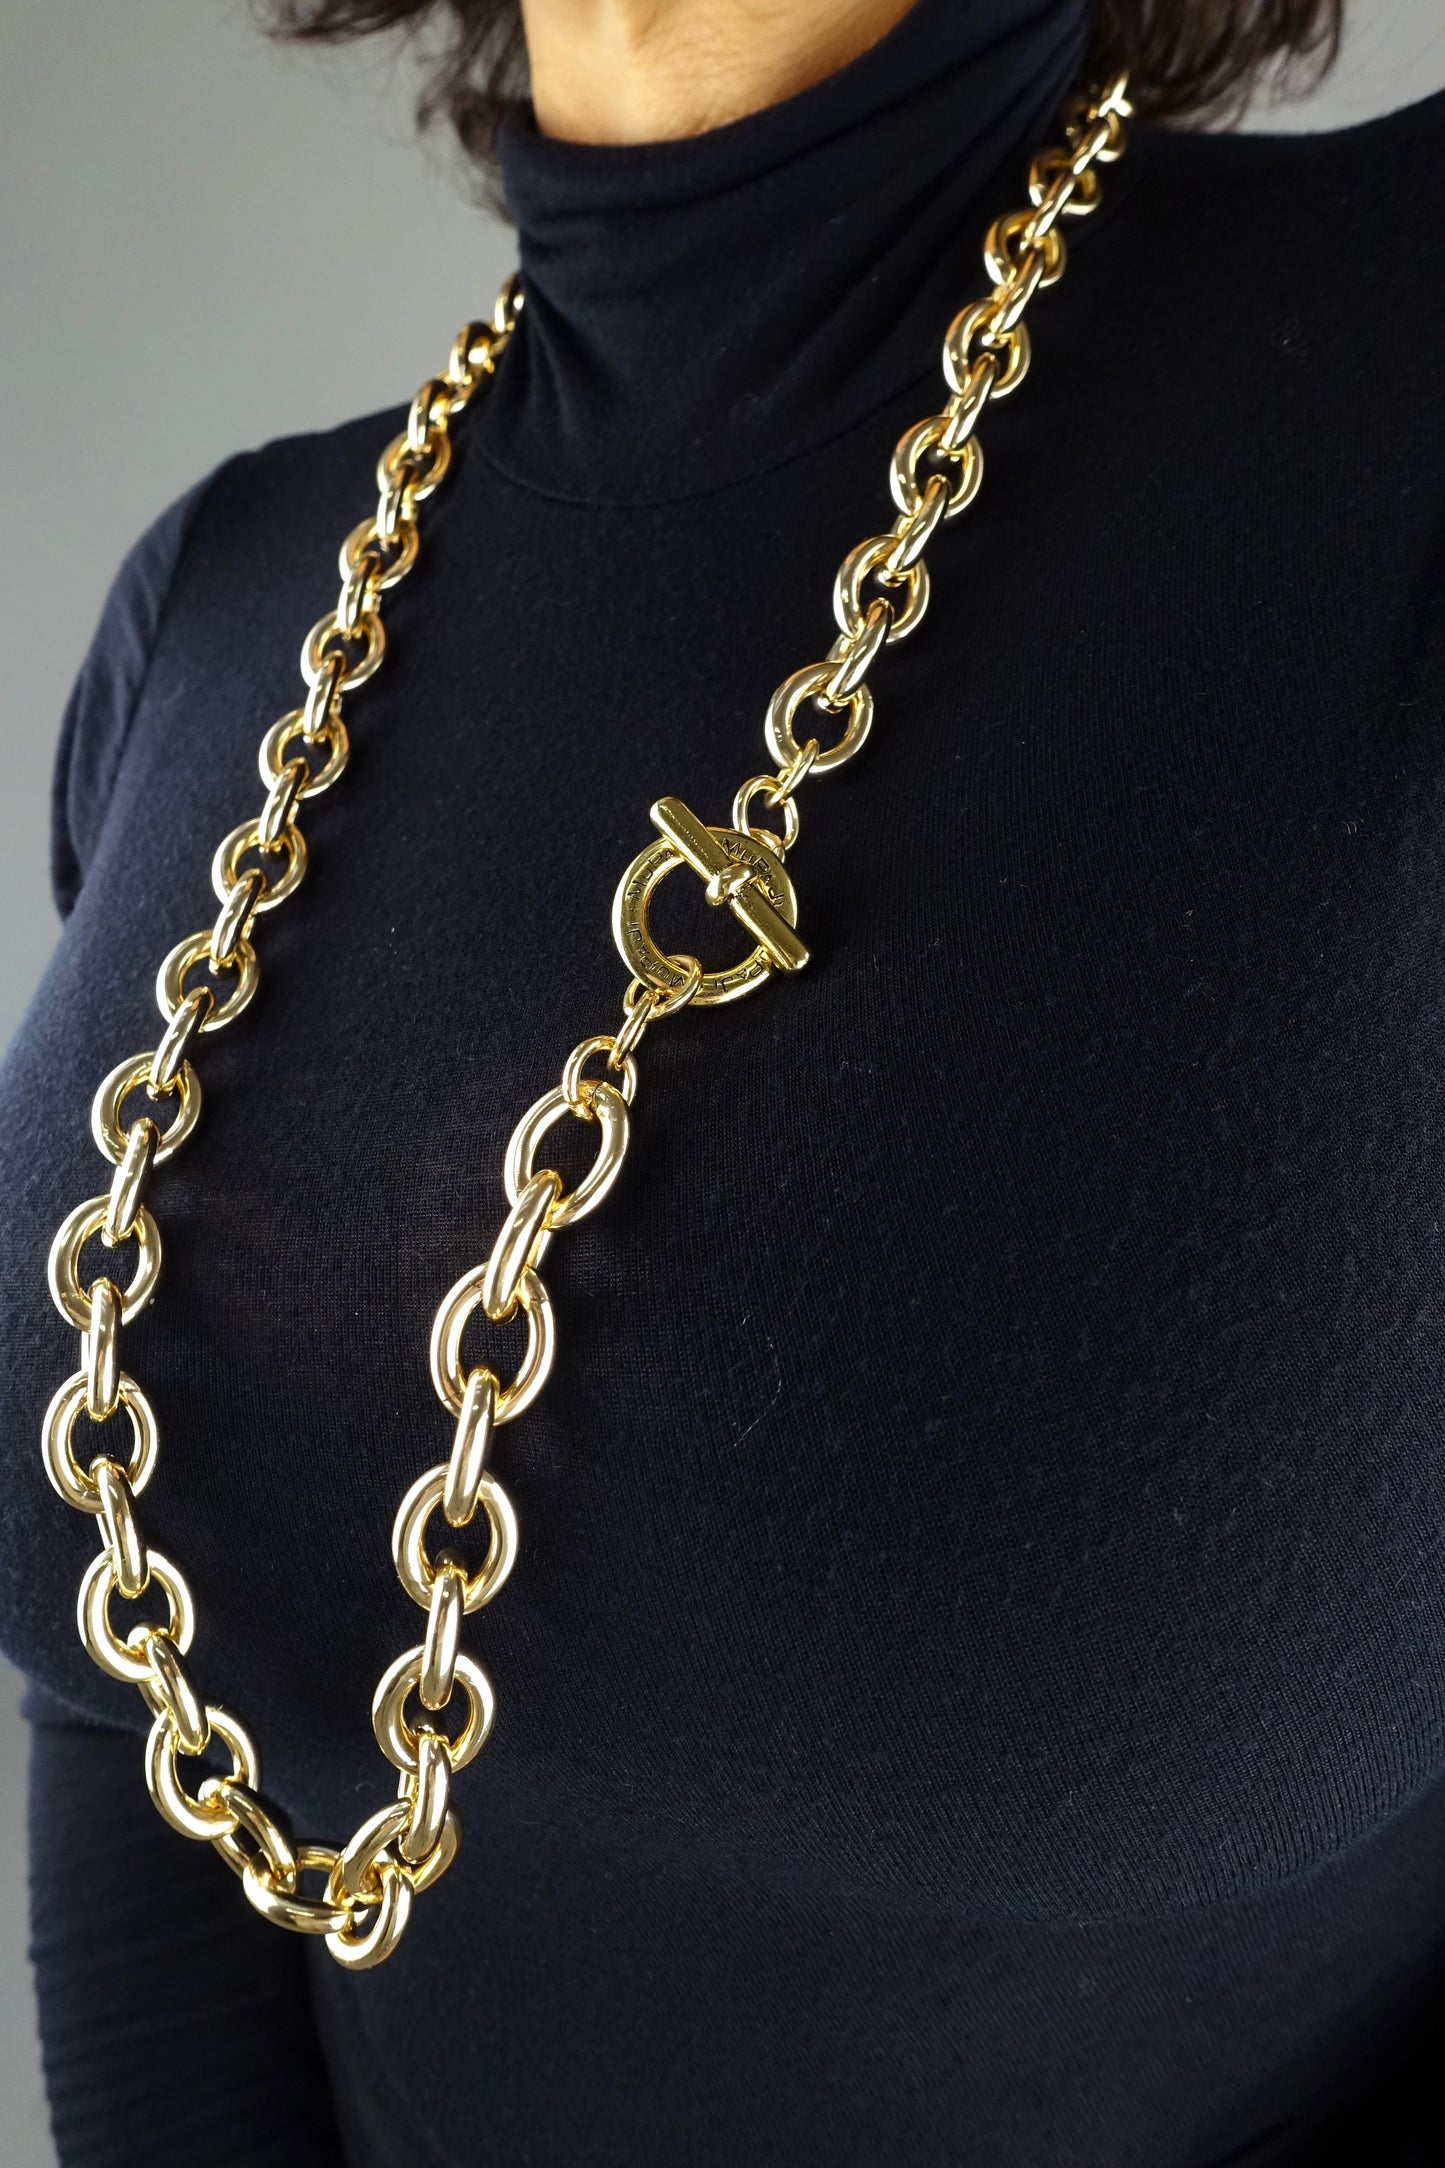 Collana lunga MC426BX
oro